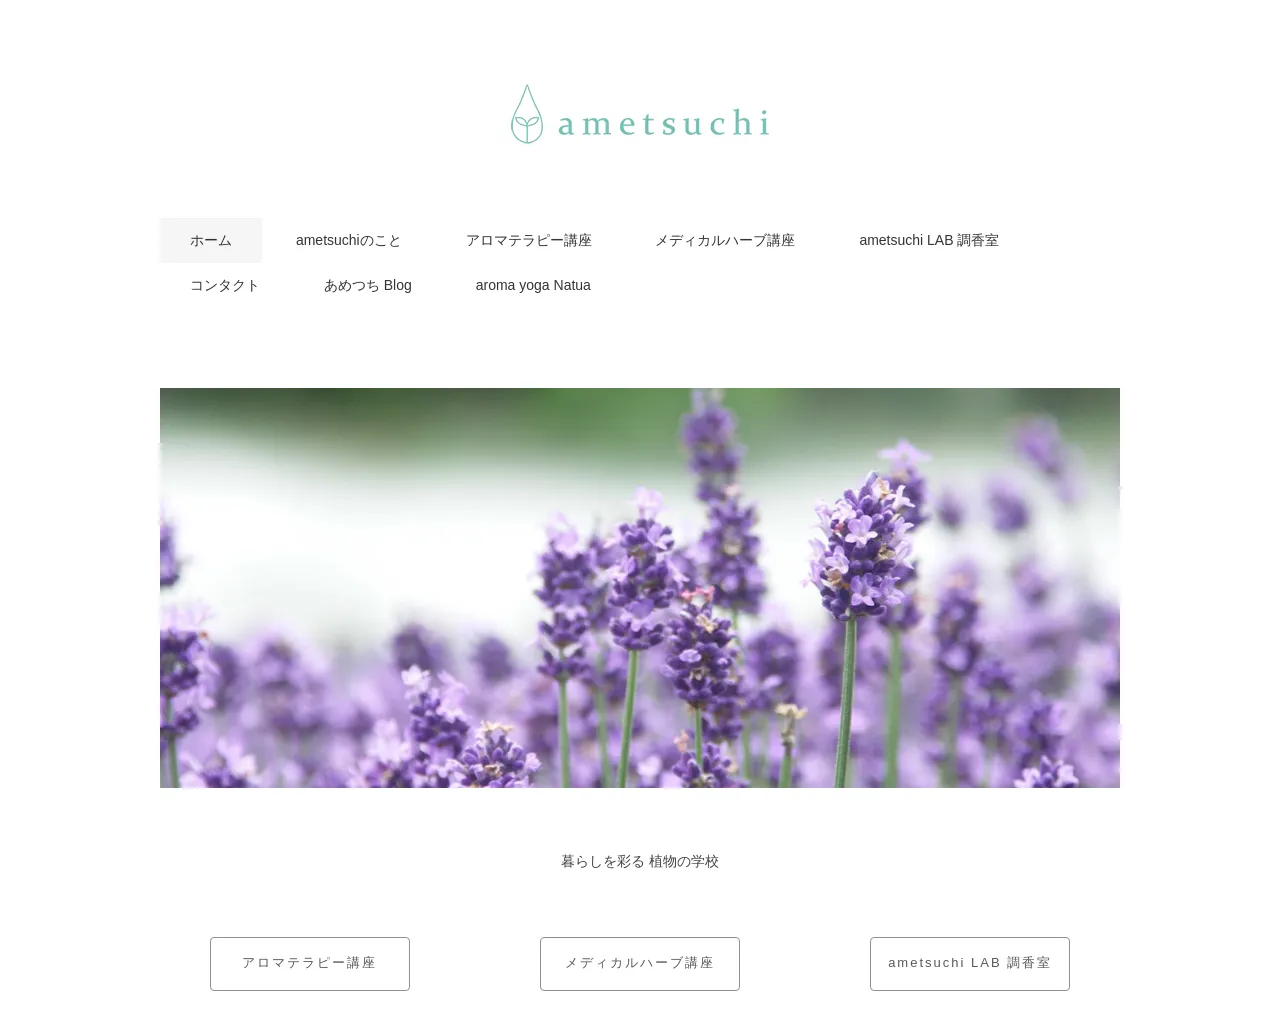 ametsuchi site